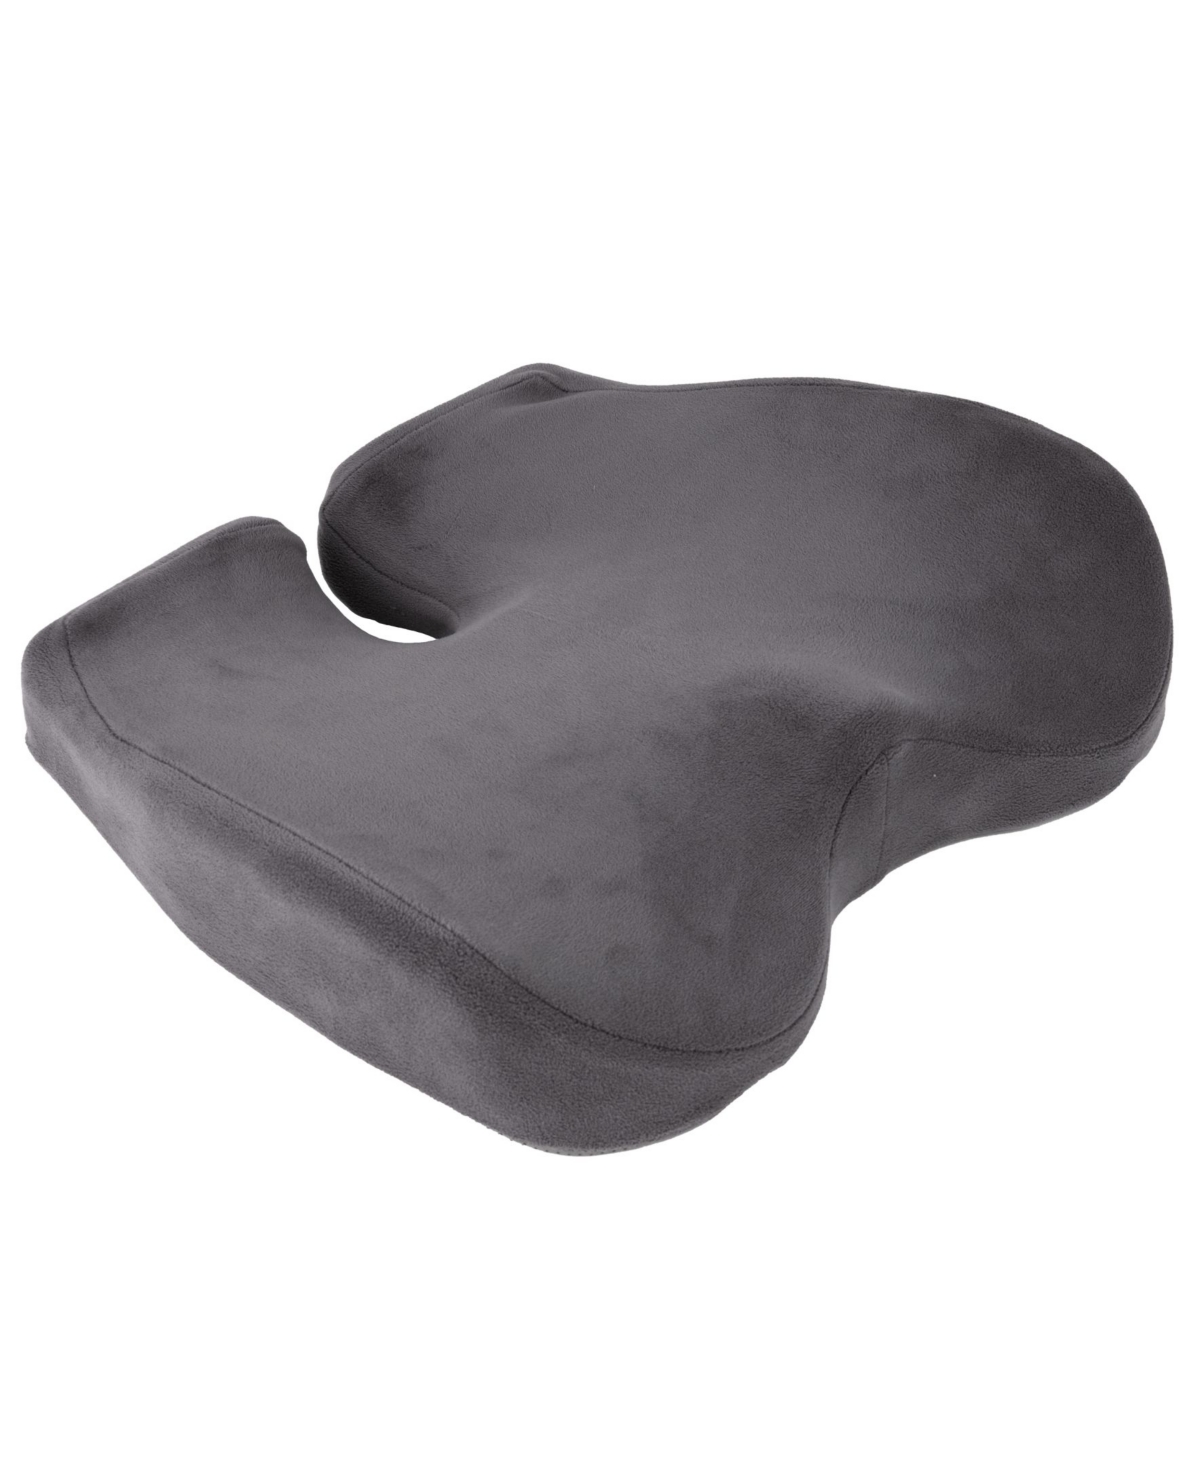 Orthopedic Seat Cushion - Gray